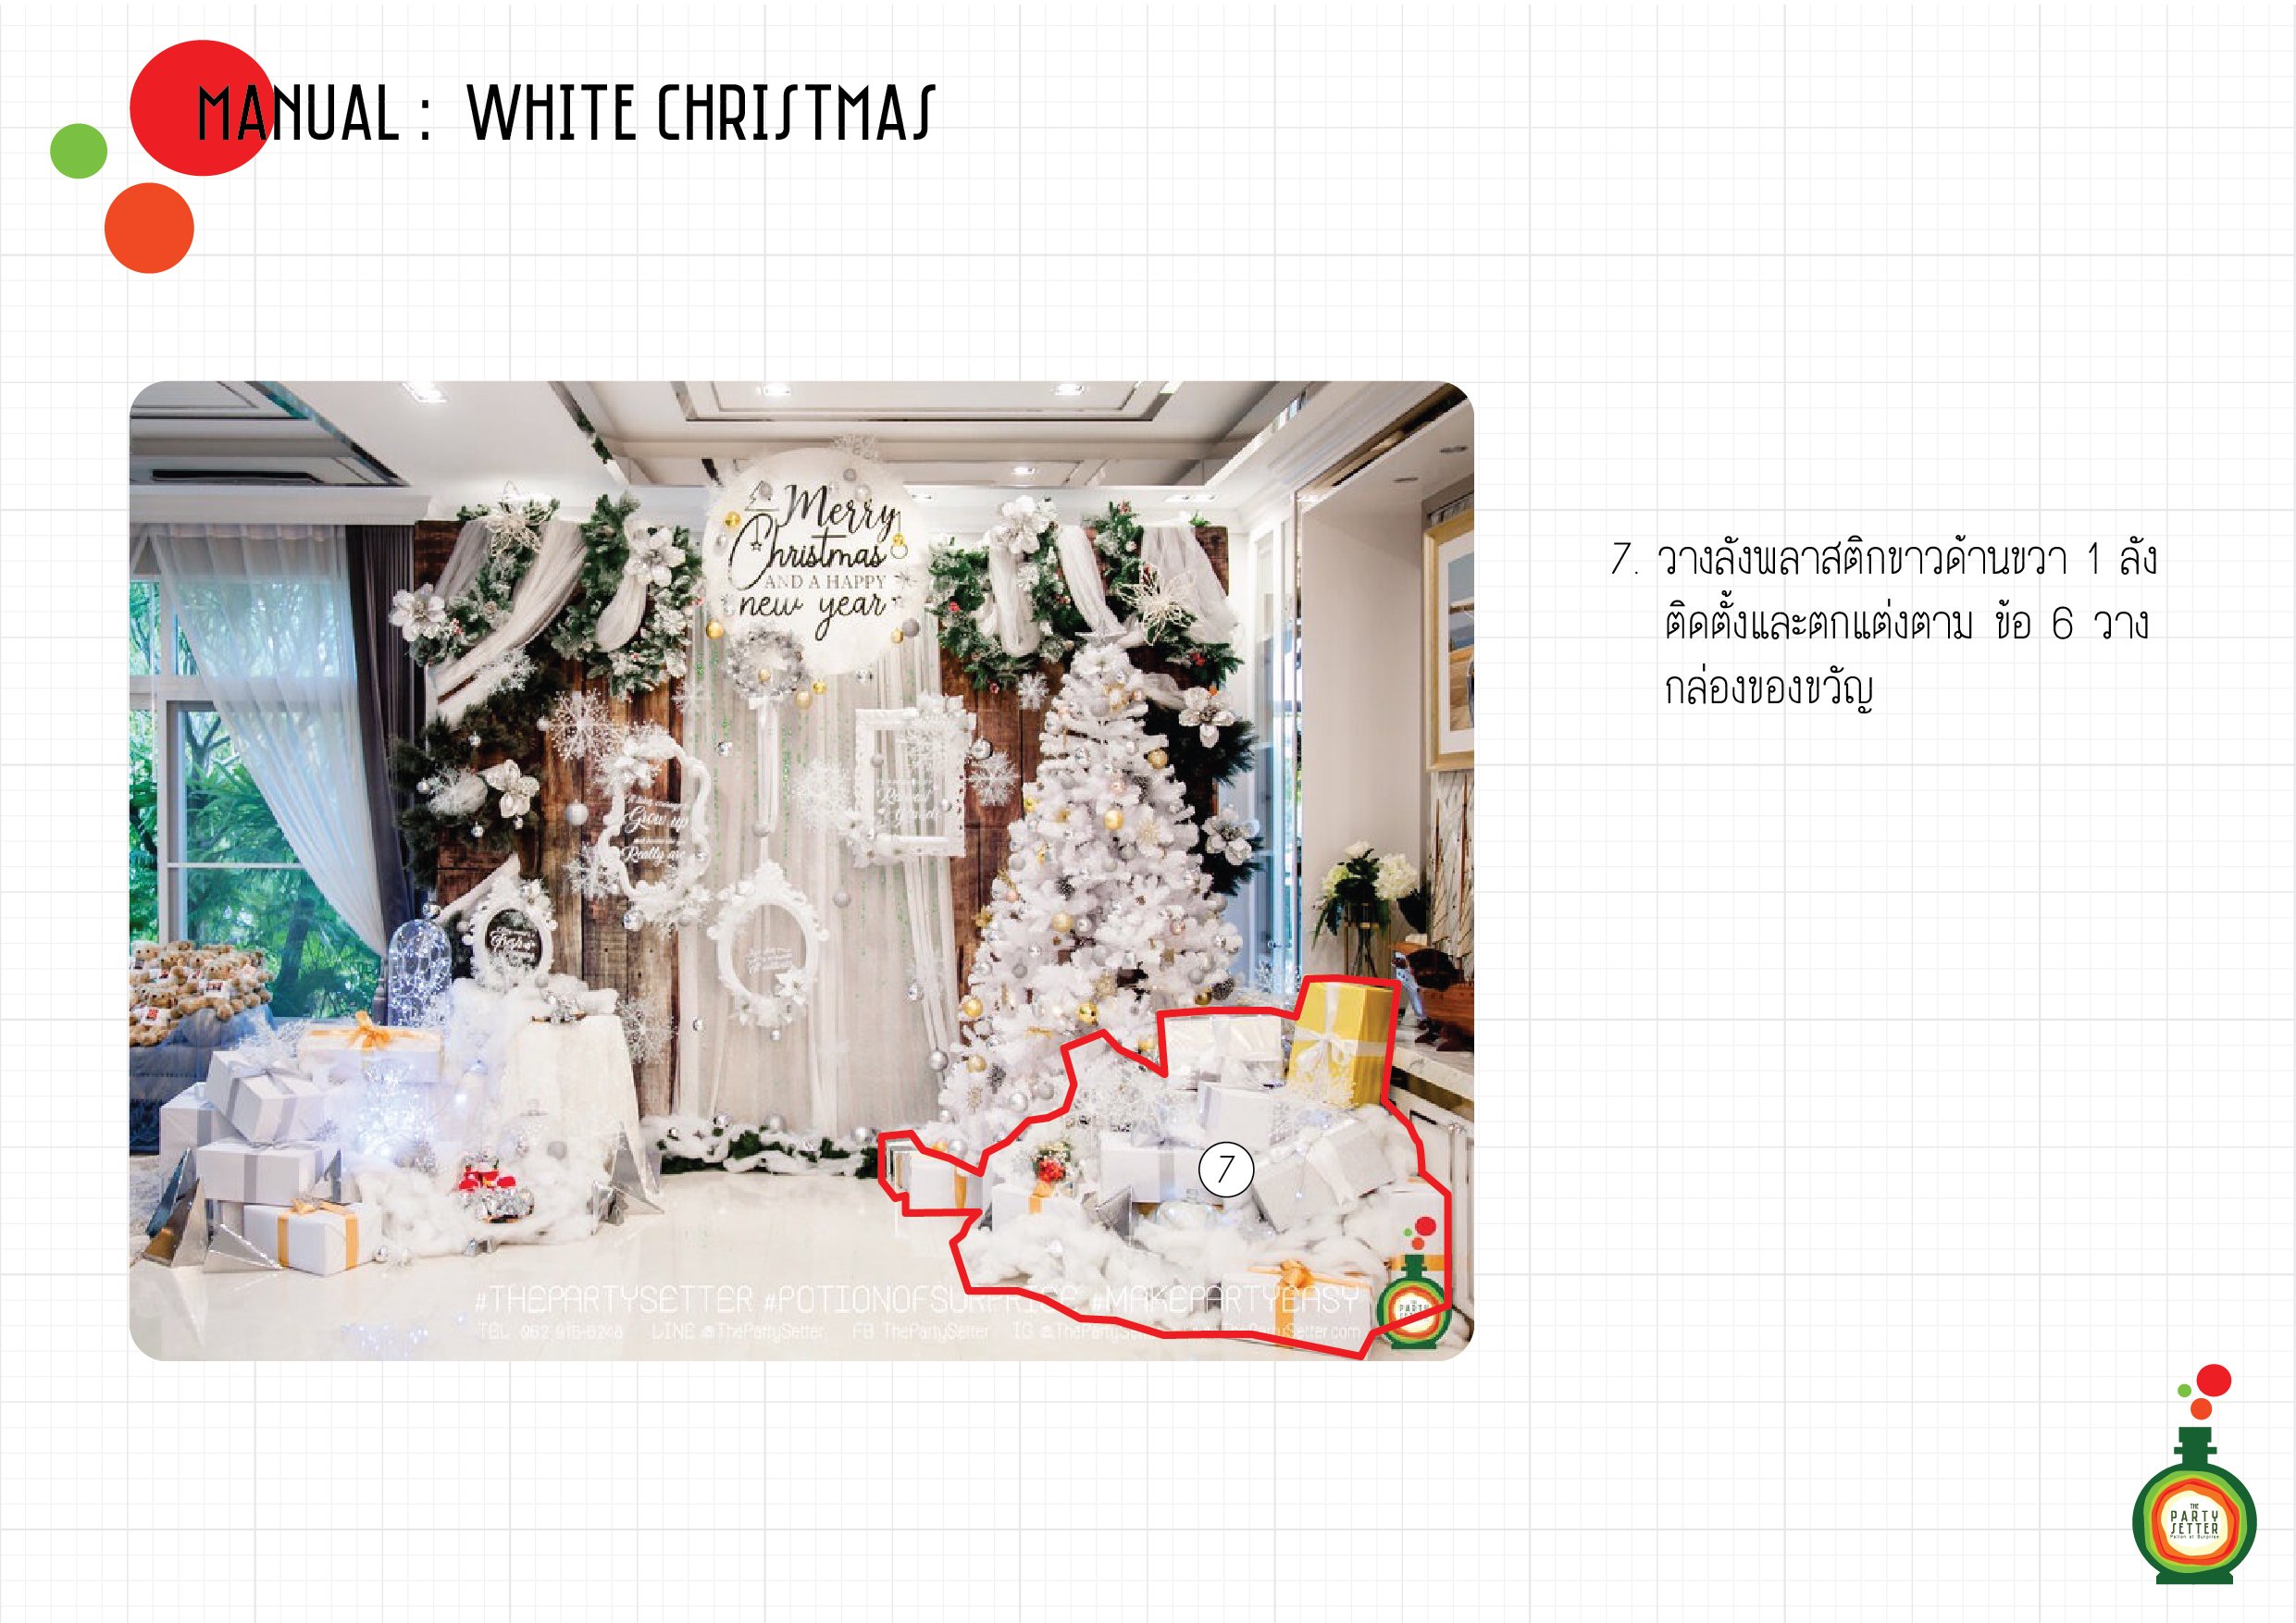 Manual_White Christmas-07-01.jpg